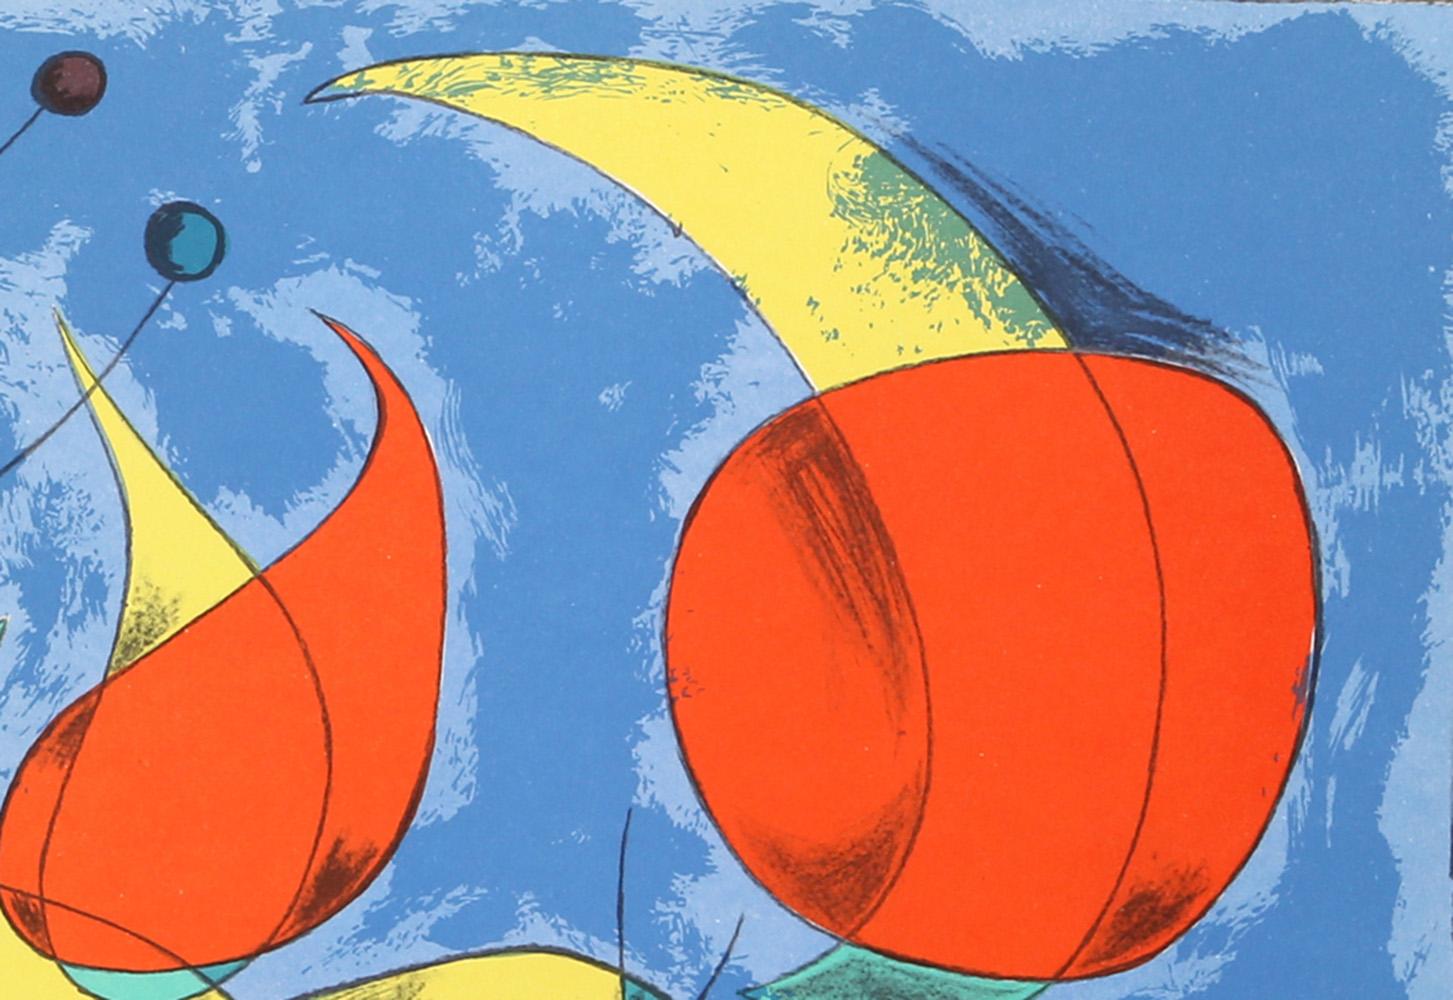 An original lithograph from the 1956 Derriere le Miroir “Miro-Artigas” folio. Printed by Mourlot, Published by Maeght, Paris.  

Artist: Joan Miro, Spanish (1893 - 1983)
Title: Zephyr Bird from Derriere Le Miroir, Miro-Artigas
Year: 1956
Medium: